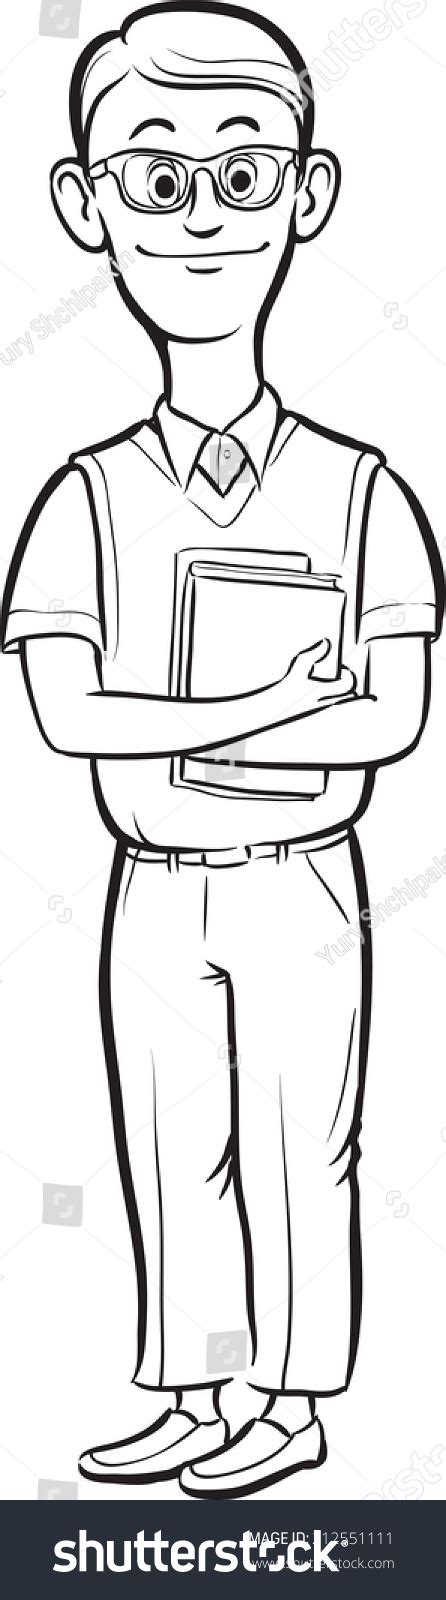 Whiteboard Drawing Cartoon Nerd Man Smiling Stock Illustration 212551111